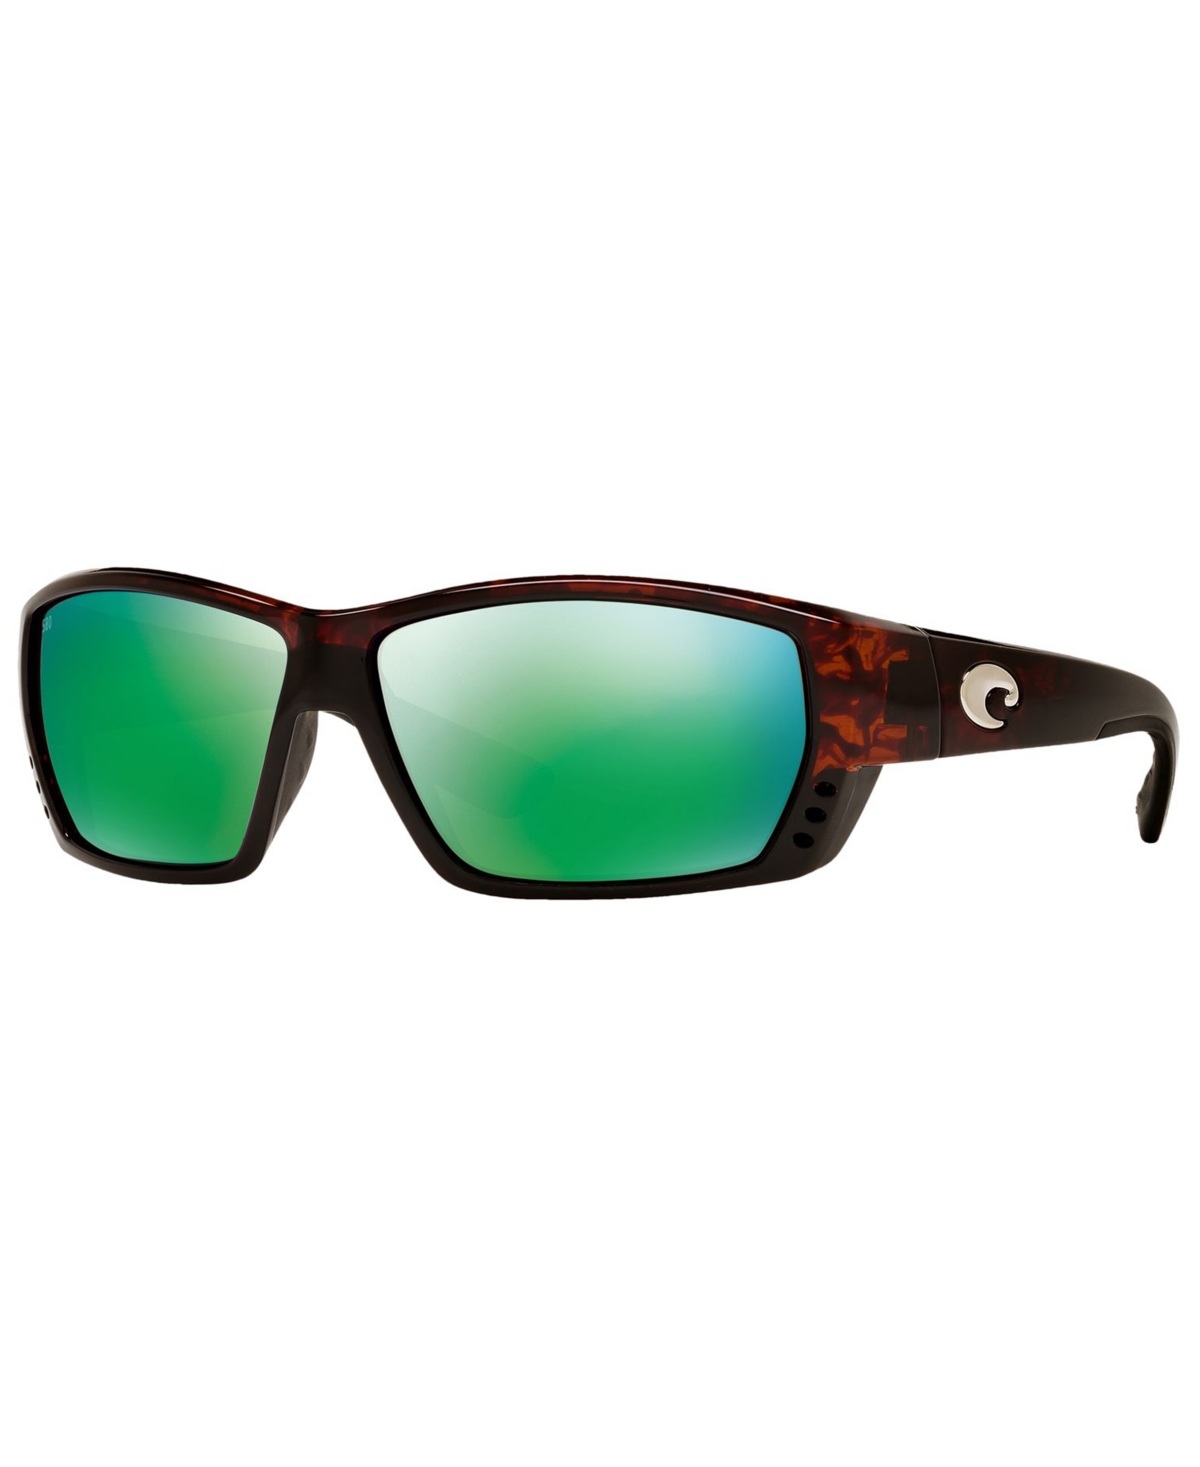 Men's Polarized Sunglasses, Tuna Alley - BLACK/ BLUE MIRROR POLAR